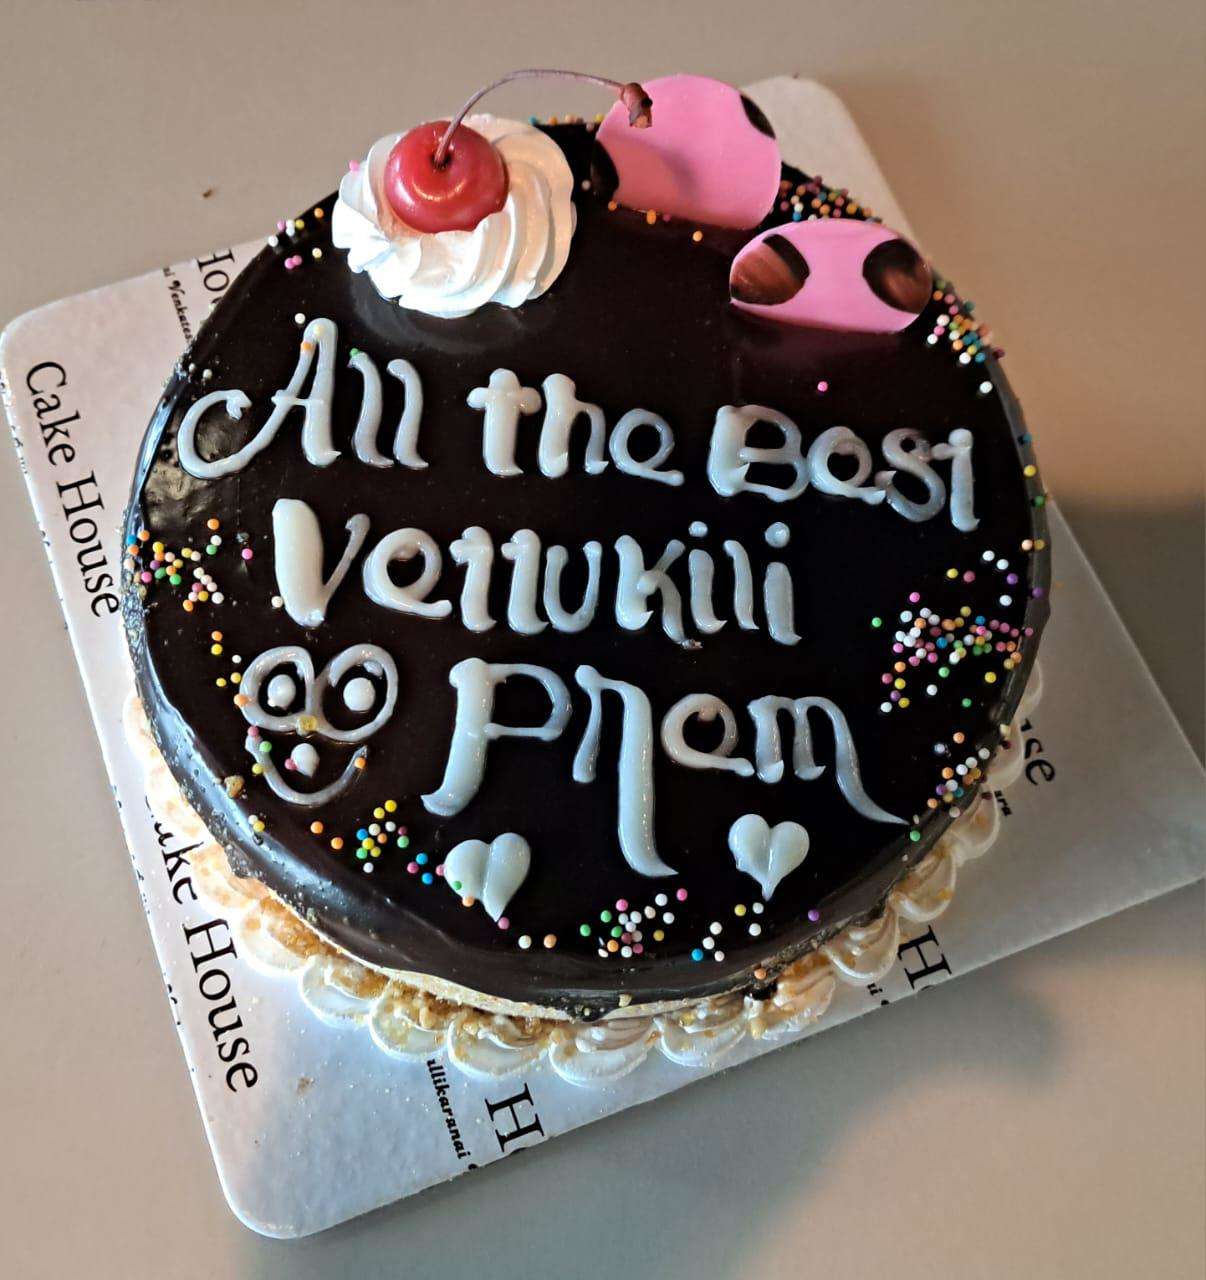 Venkat Cake Shop in Selaiyur,Chennai - Best Cake Shops in Chennai - Justdial